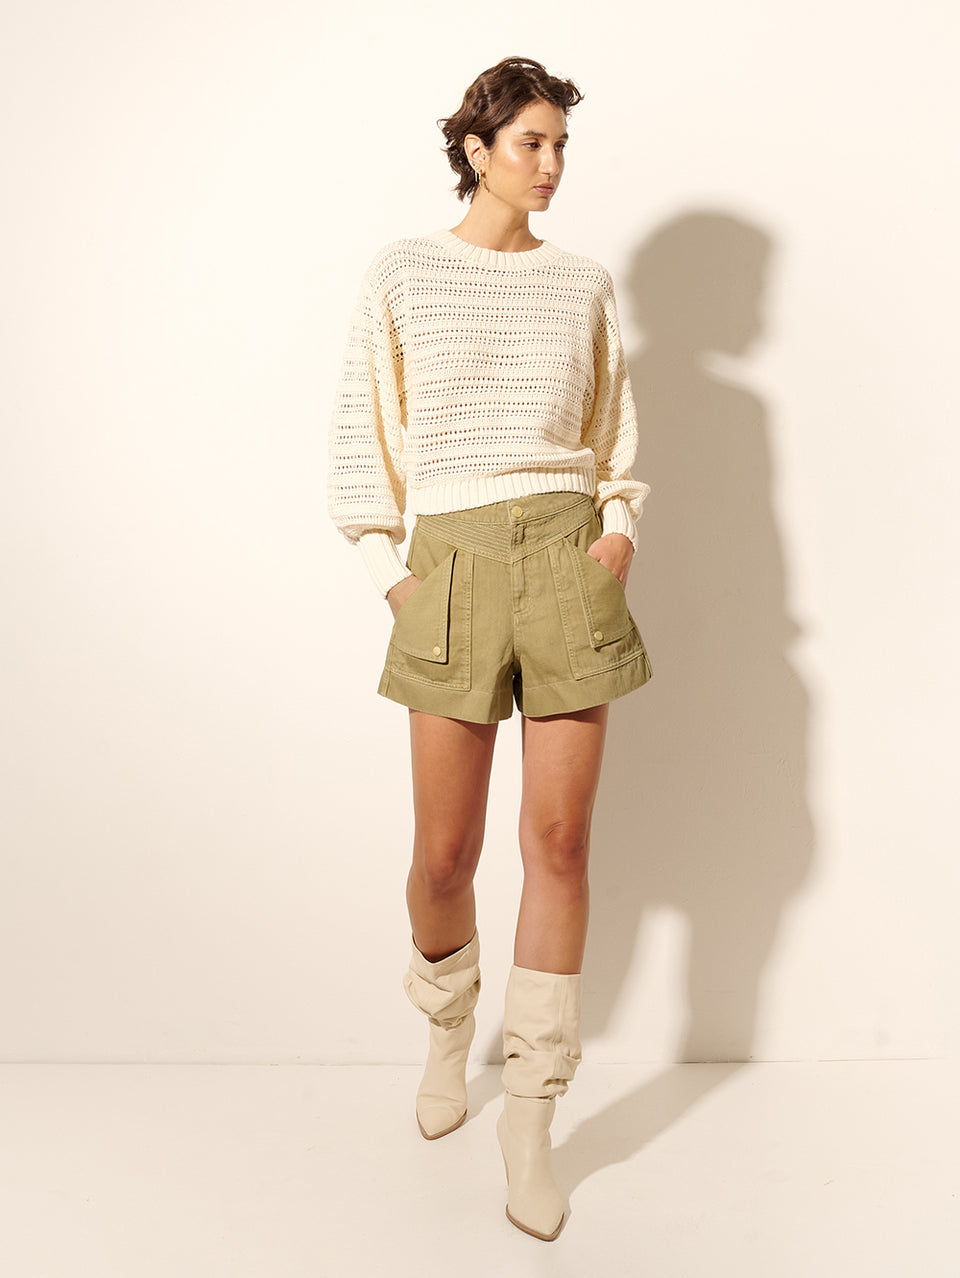 Pepe Knit Sweater Cream KIVARI | Model wears cream knit sweater